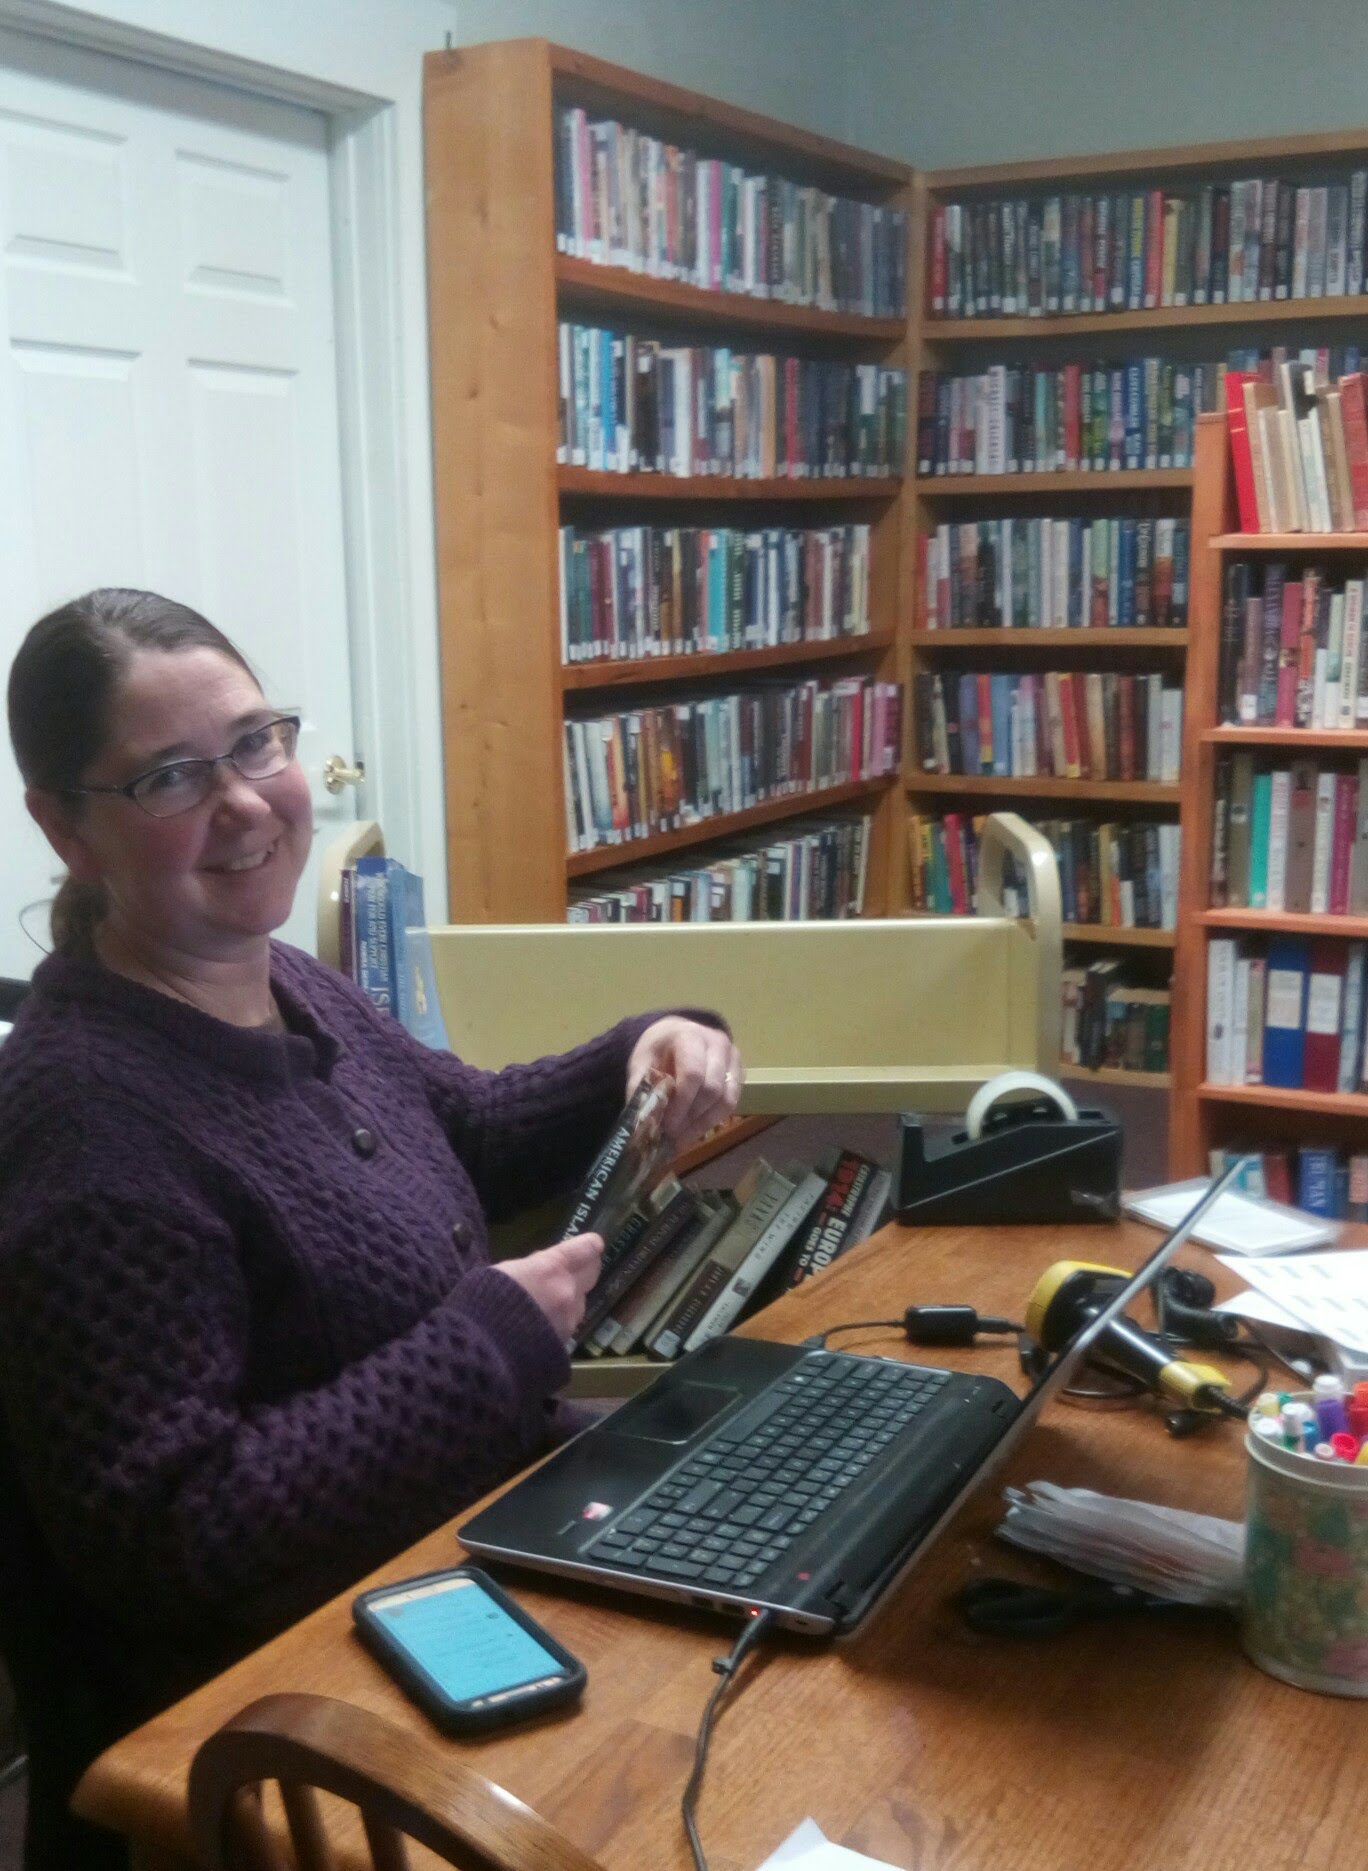 Our collaborator, Craftsbury Librarian, Susan O"Connell